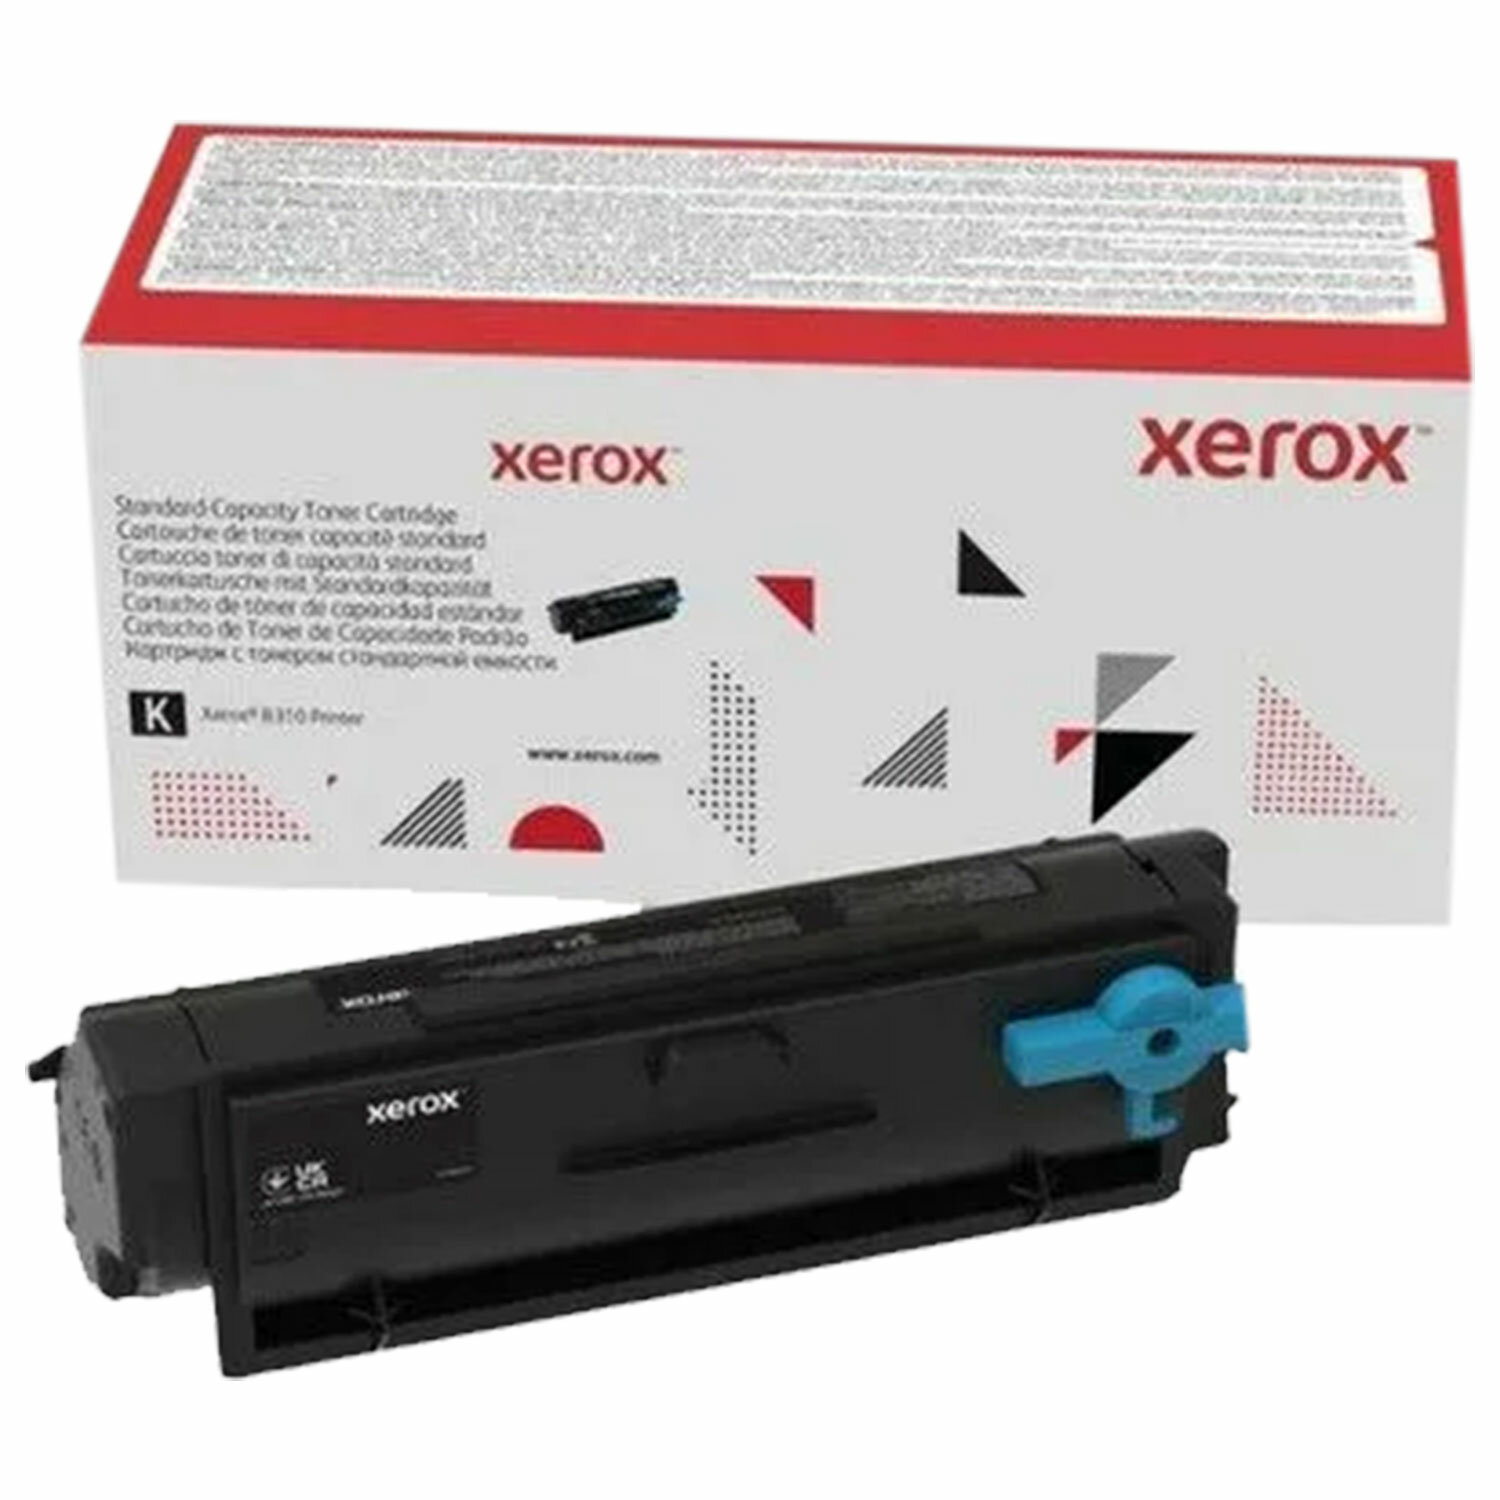  XEROX 364310